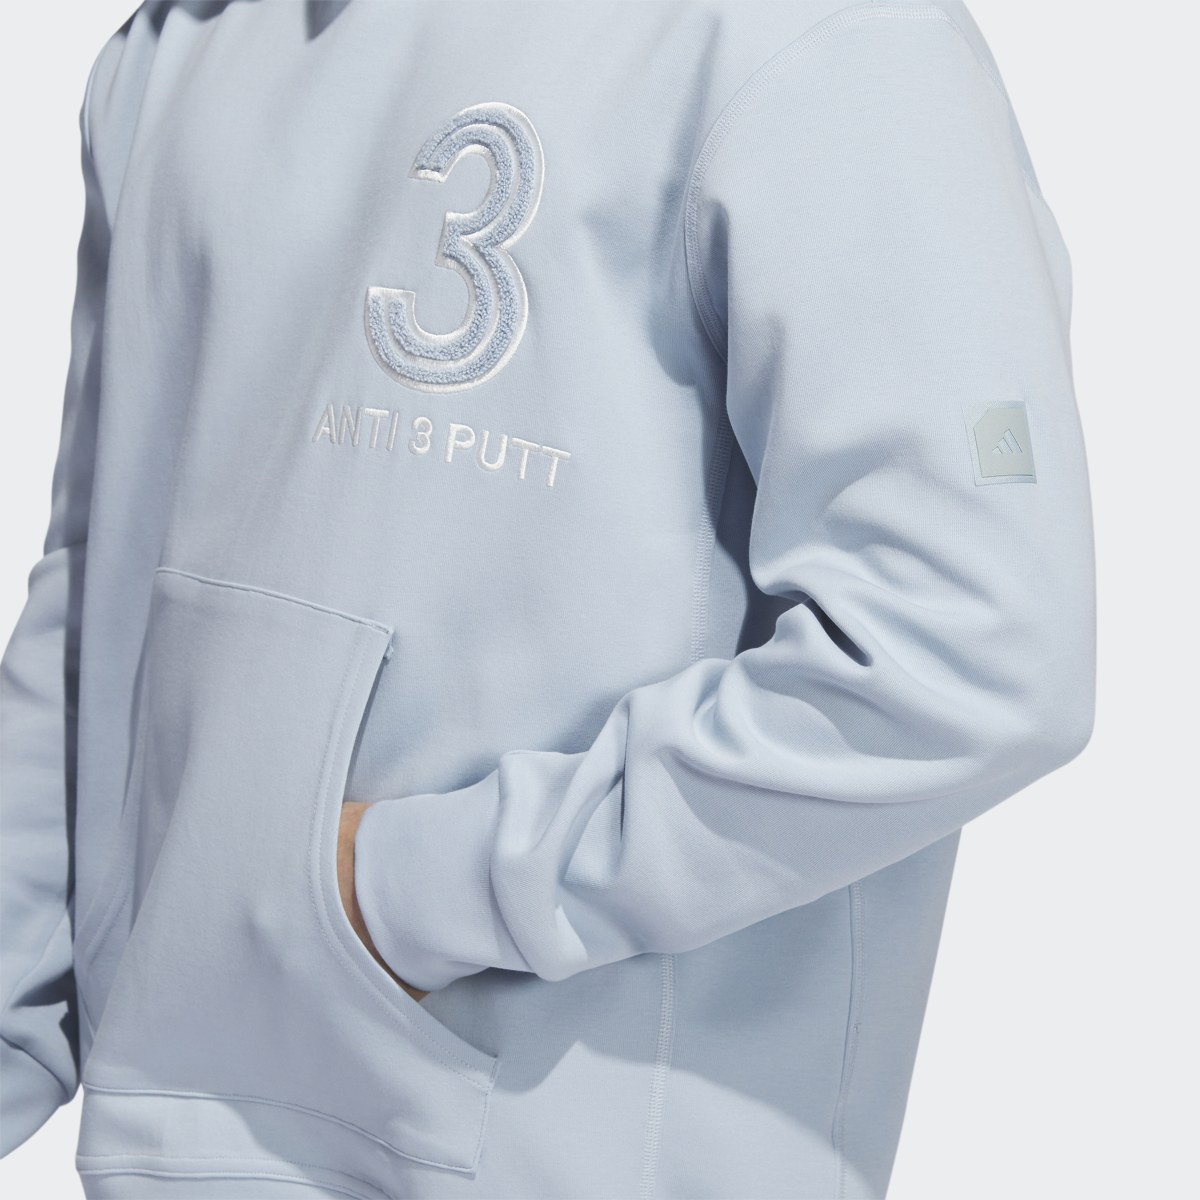 Adidas Sweat-shirt à capuche Adicross Anti 3 Putt. 6